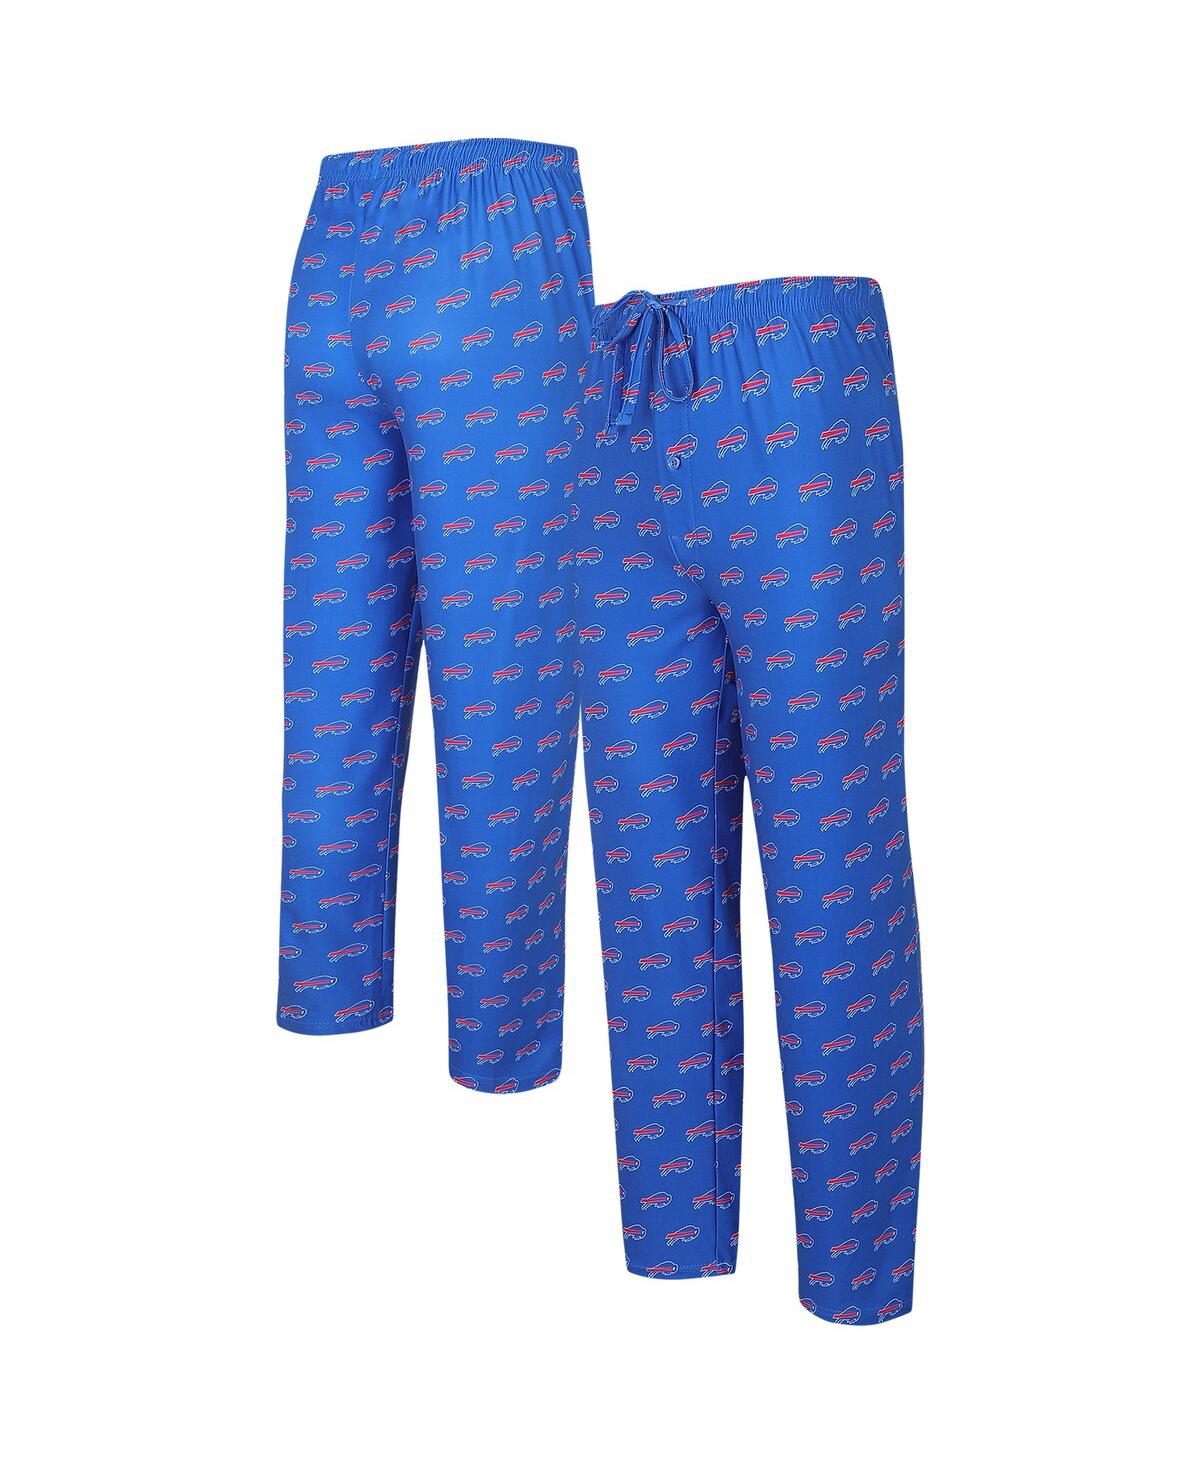 Men's Concepts Sport Royal Buffalo Bills Gauge Allover Print Knit Sleep Pants - Royal